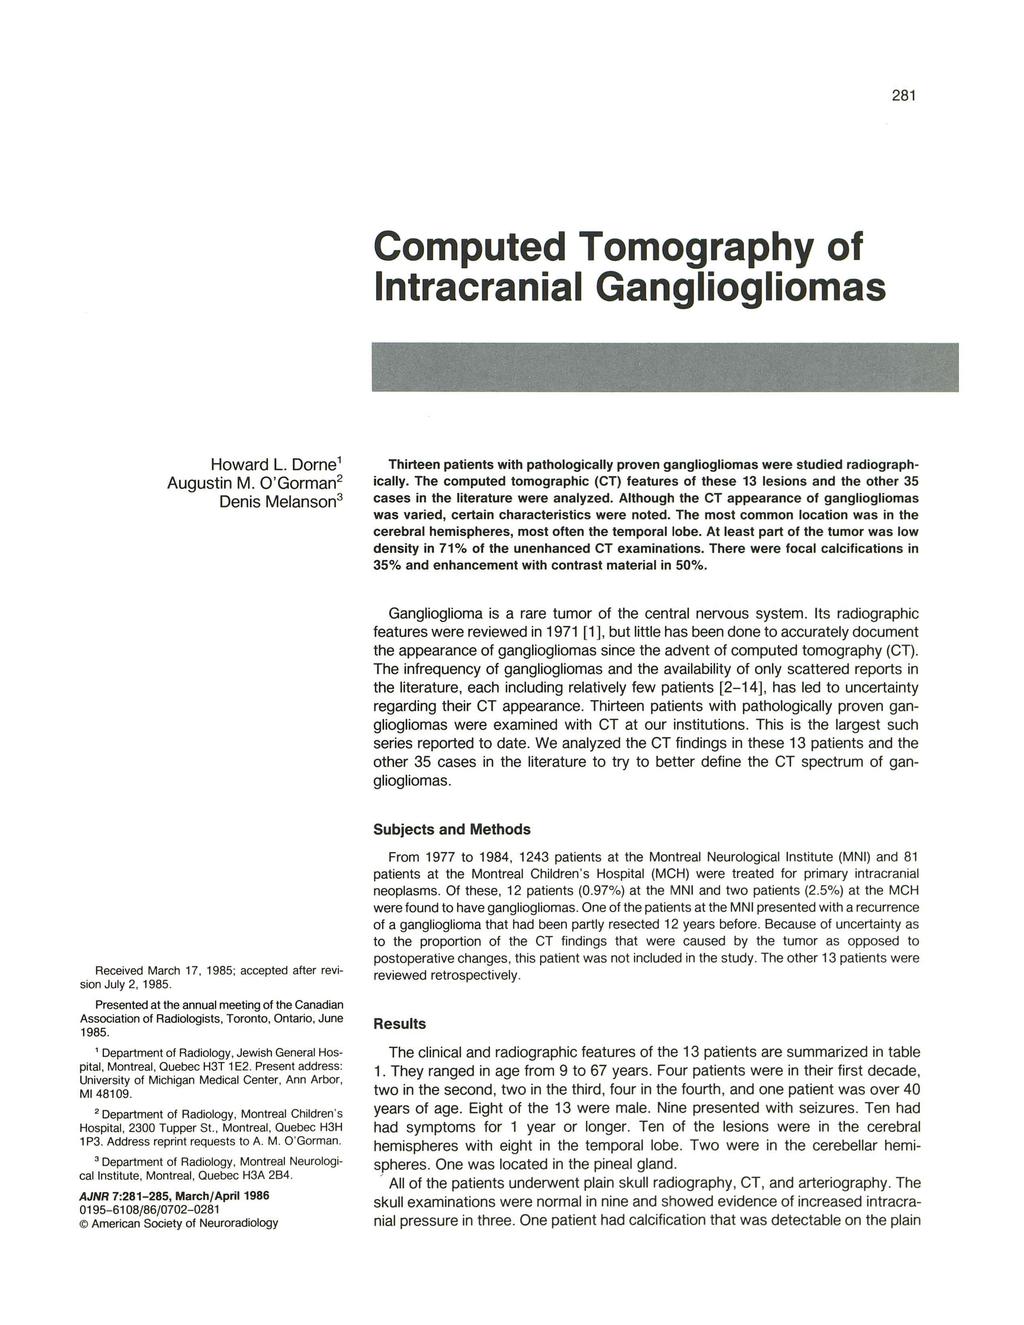 281 Computed Tomography of Intracranial Gangliogliomas Howard L. Dorne 1 Augustin M.